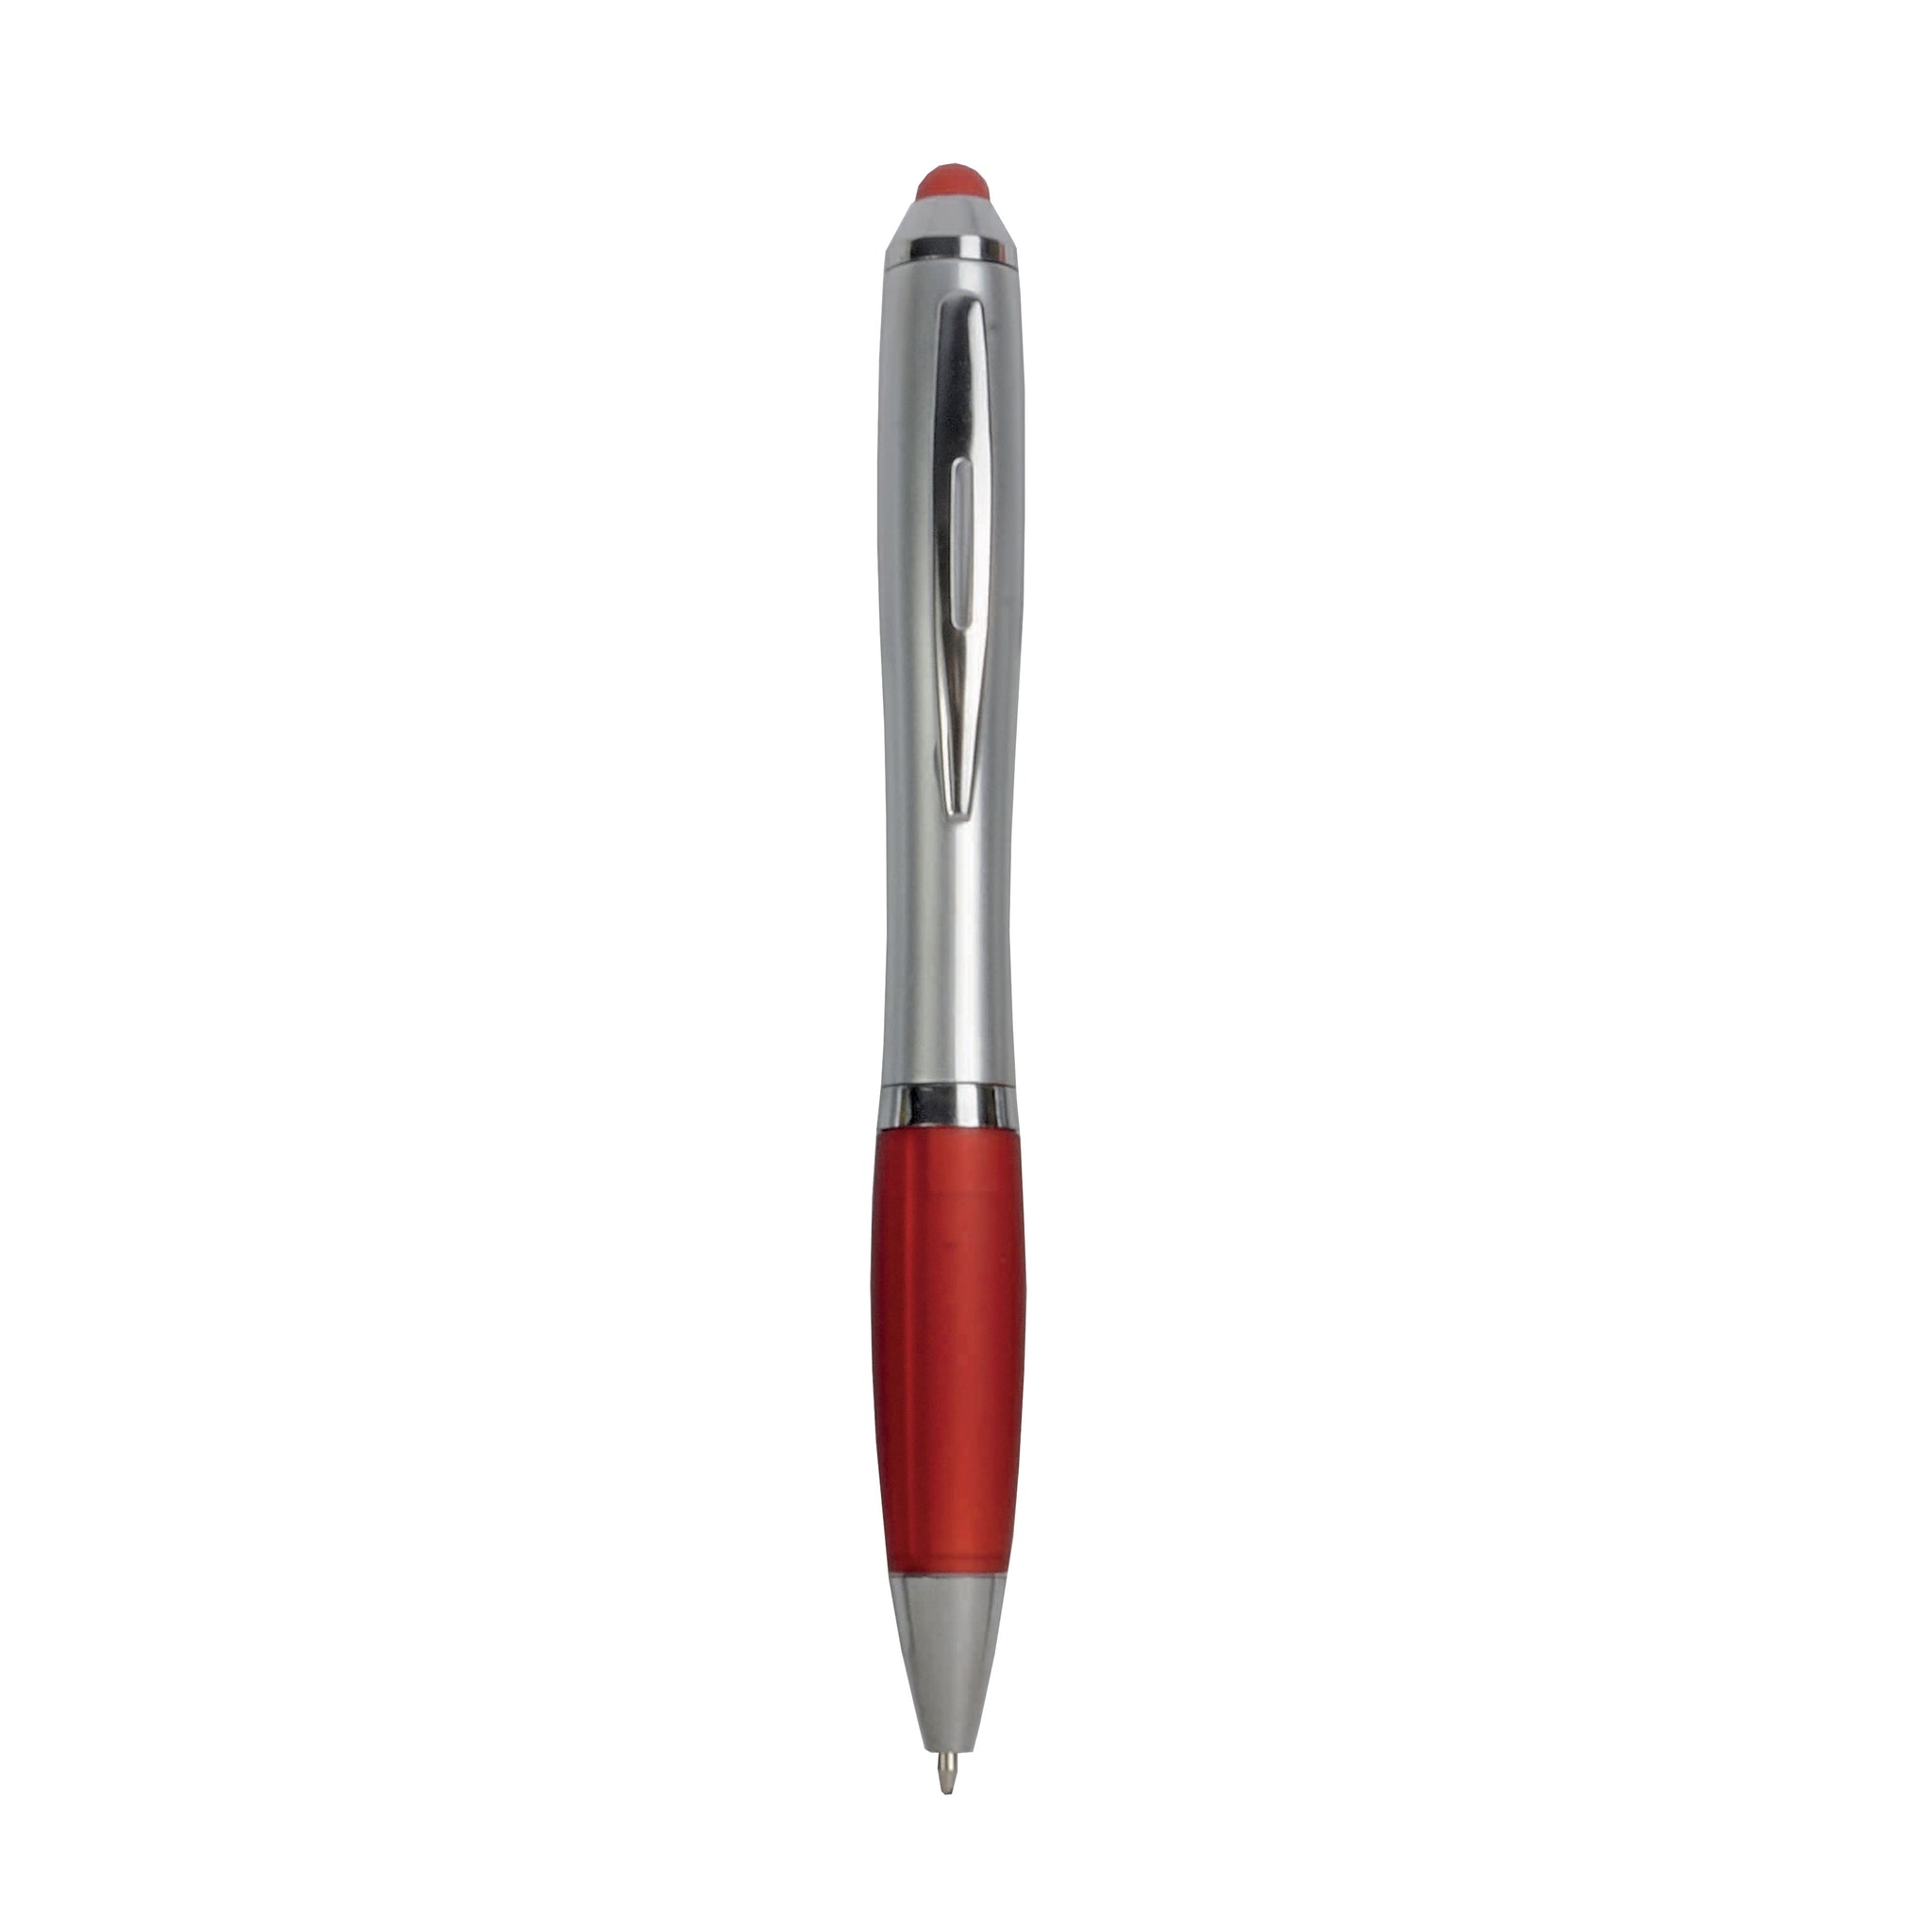 biro promozionale in plastica rossa 01285821 VAR06